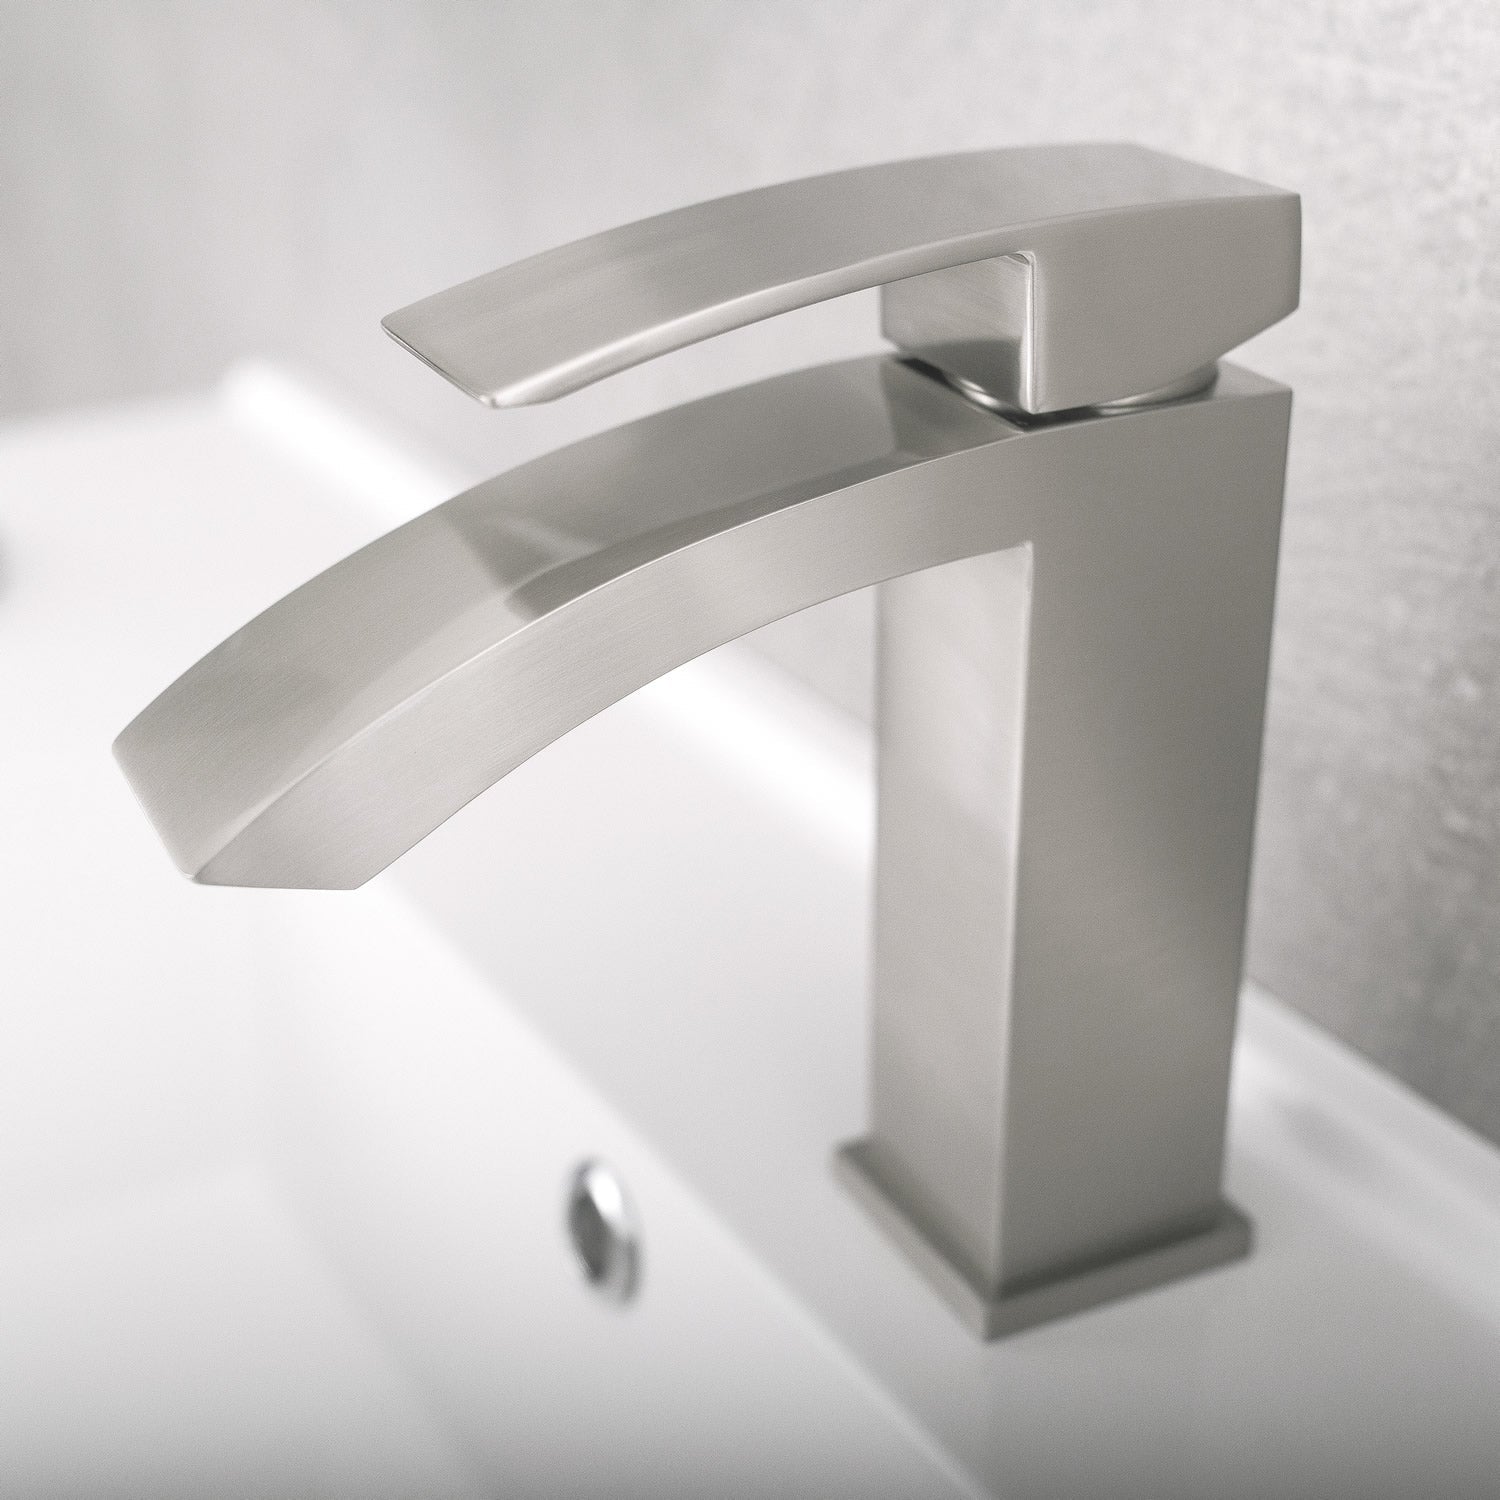 DAX Single Handle Waterfall Bathroom Faucet, Brass Body,  4-7/8 x 7 Inches (DAX-6690A)